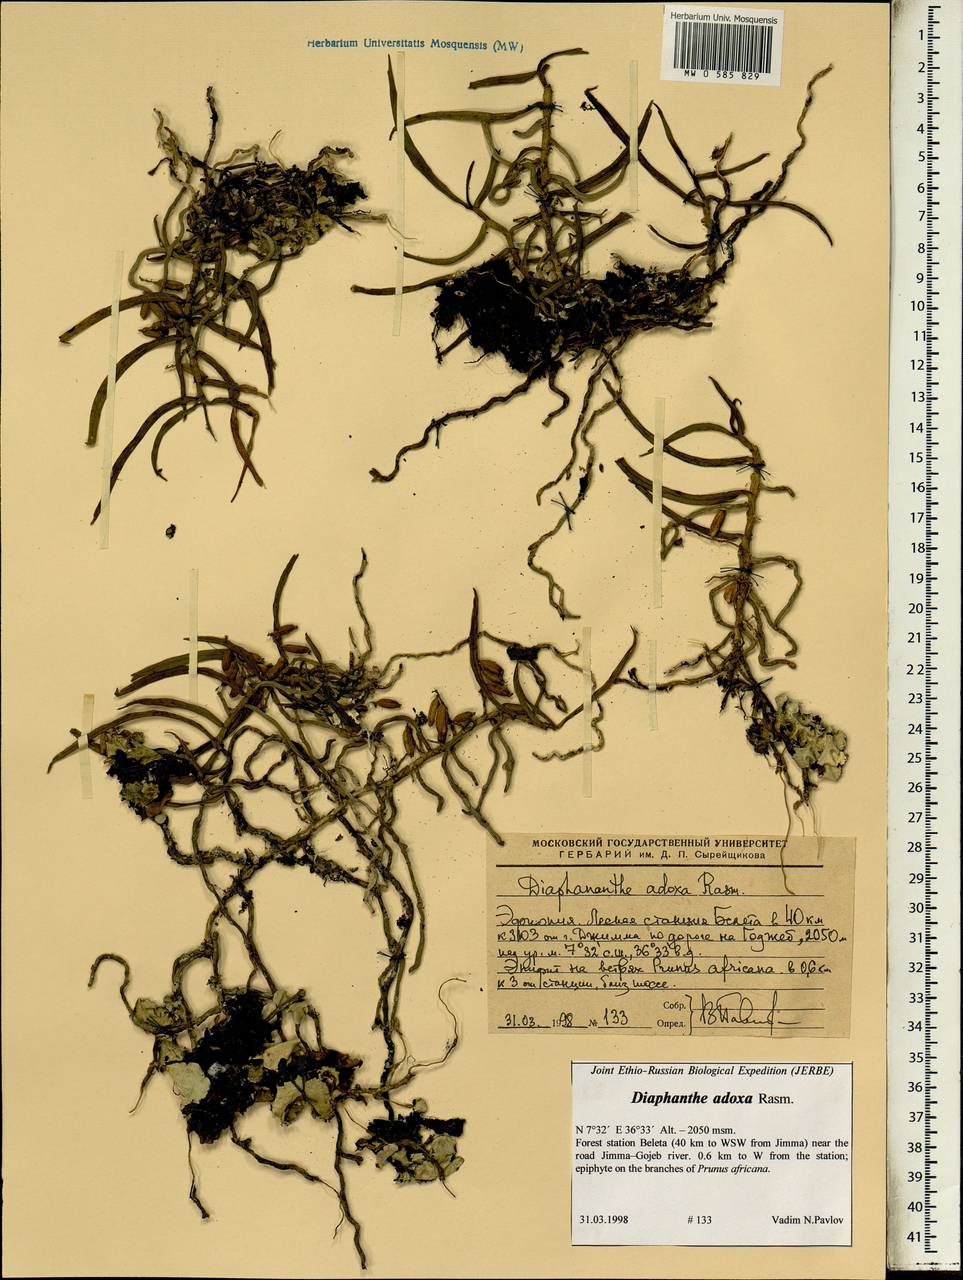 Rhipidoglossum adoxum (F.N.Rasm.) Senghas, Africa (AFR) (Ethiopia)